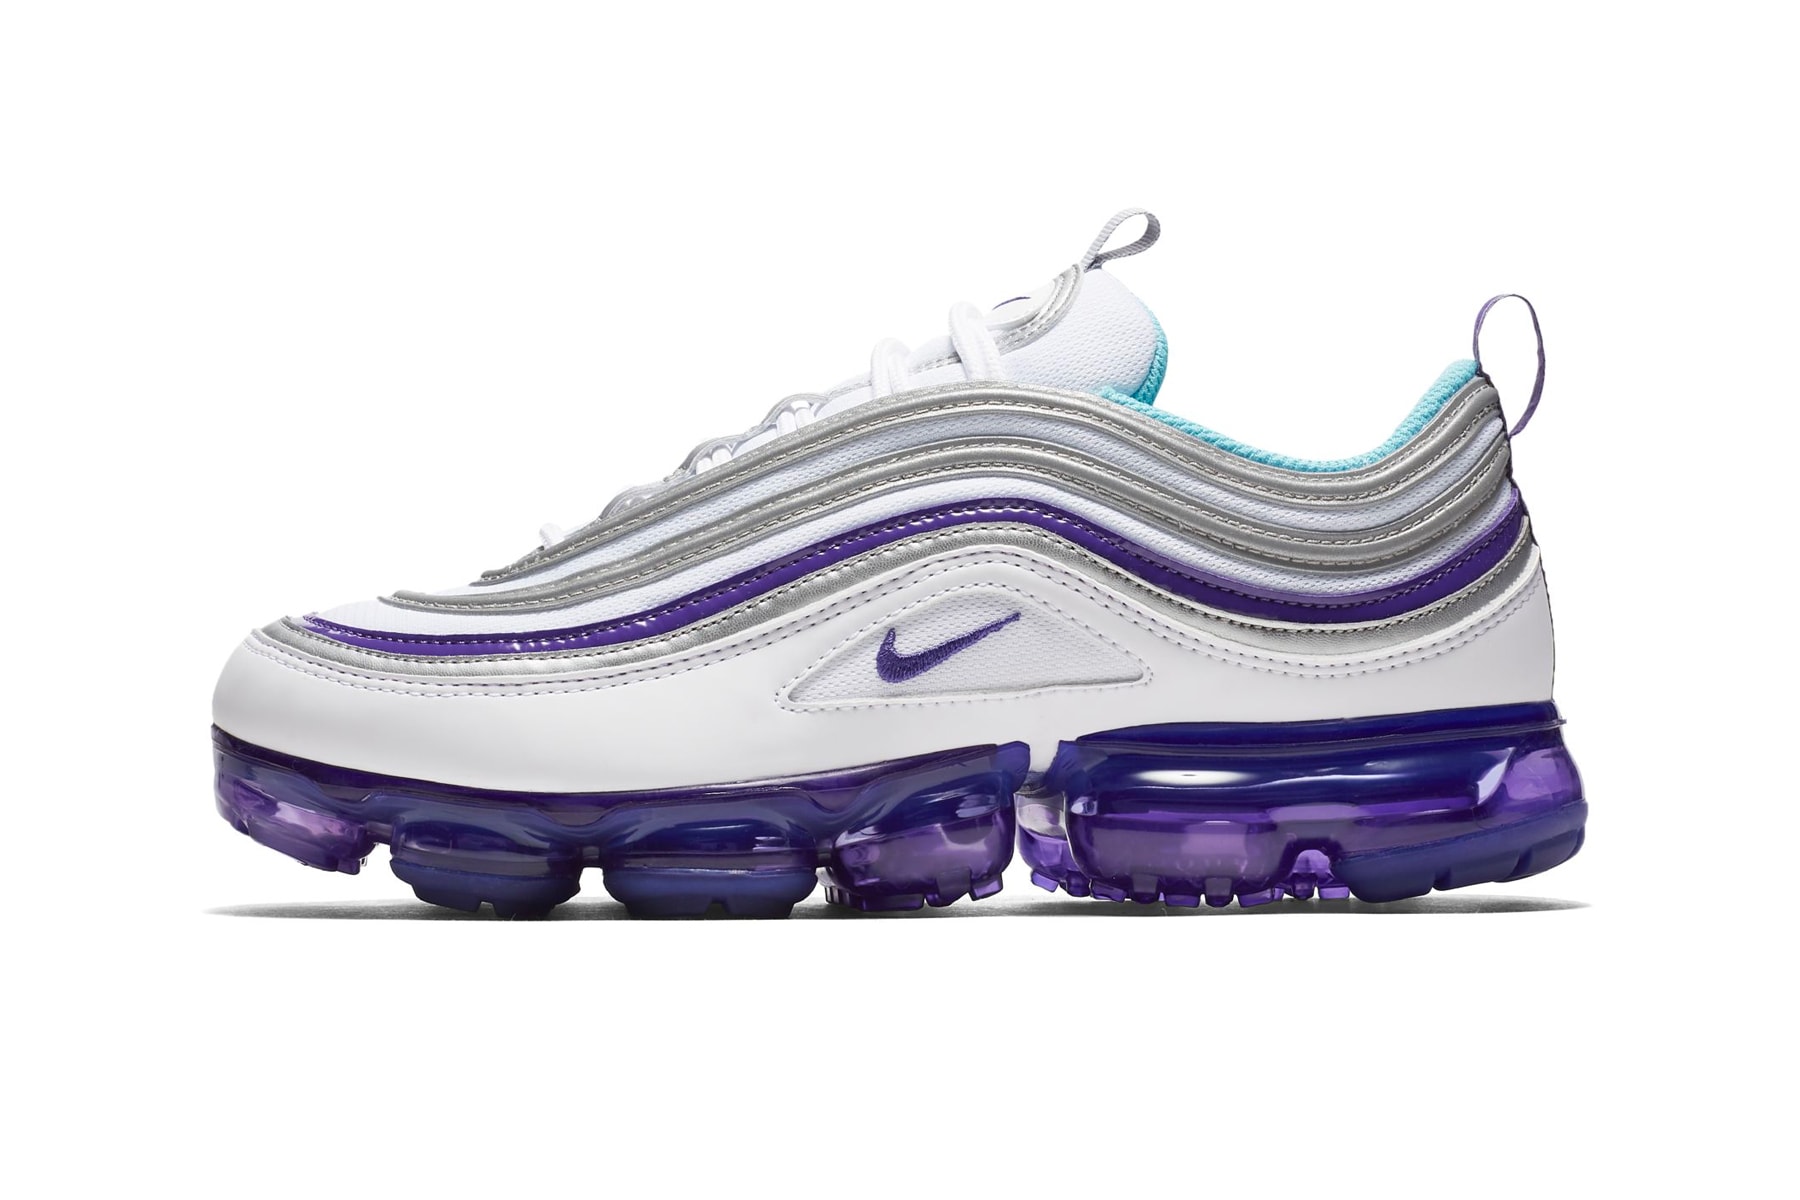 Nike Air Vapormax 97 White Varsity Purple release date sneaker price aqua